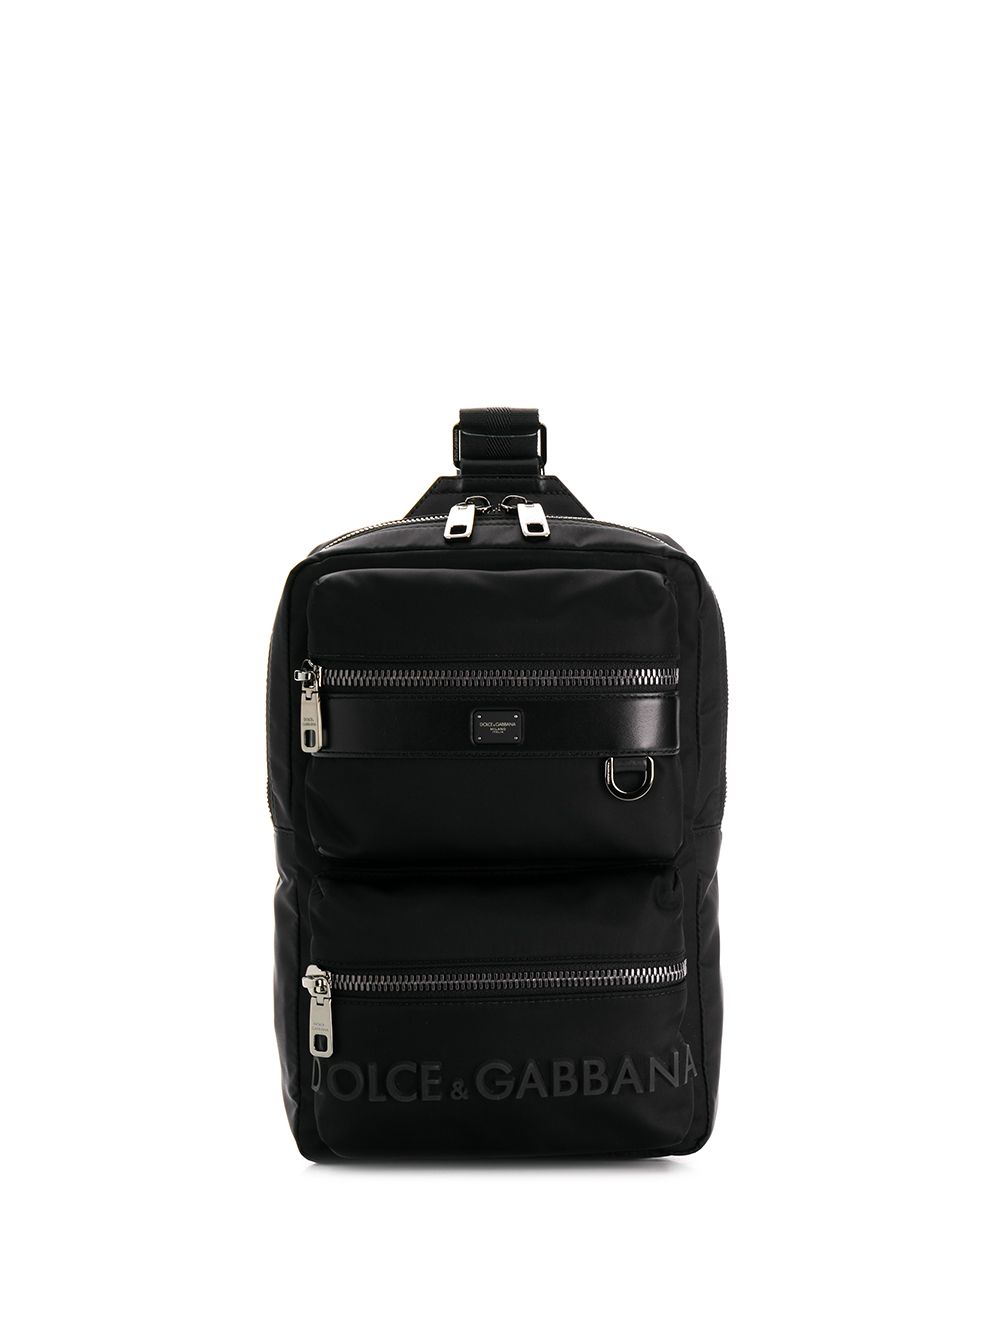 фото Dolce & Gabbana рюкзак с одной лямкой